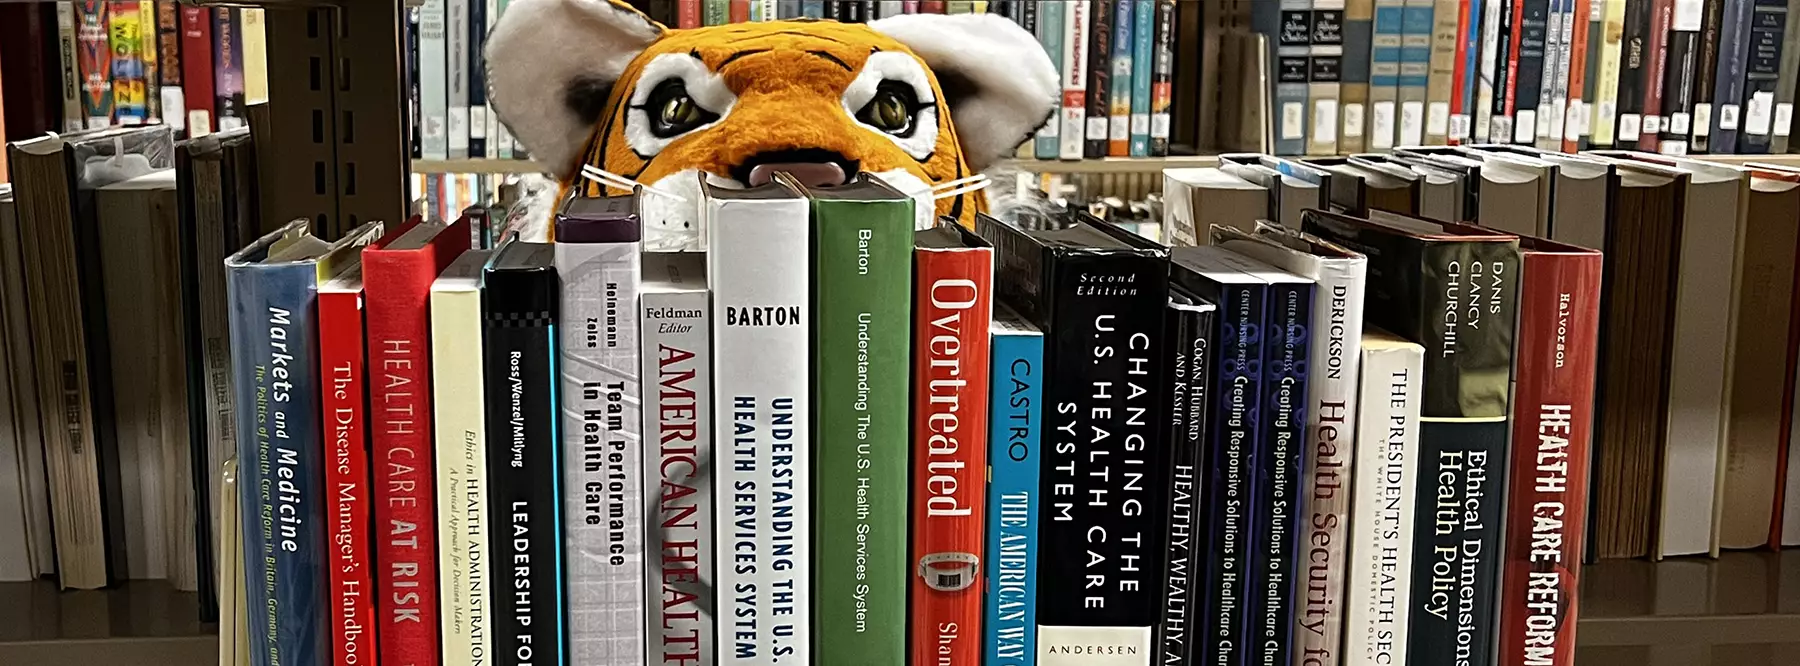 Mascot HJ peering over a shelf of books